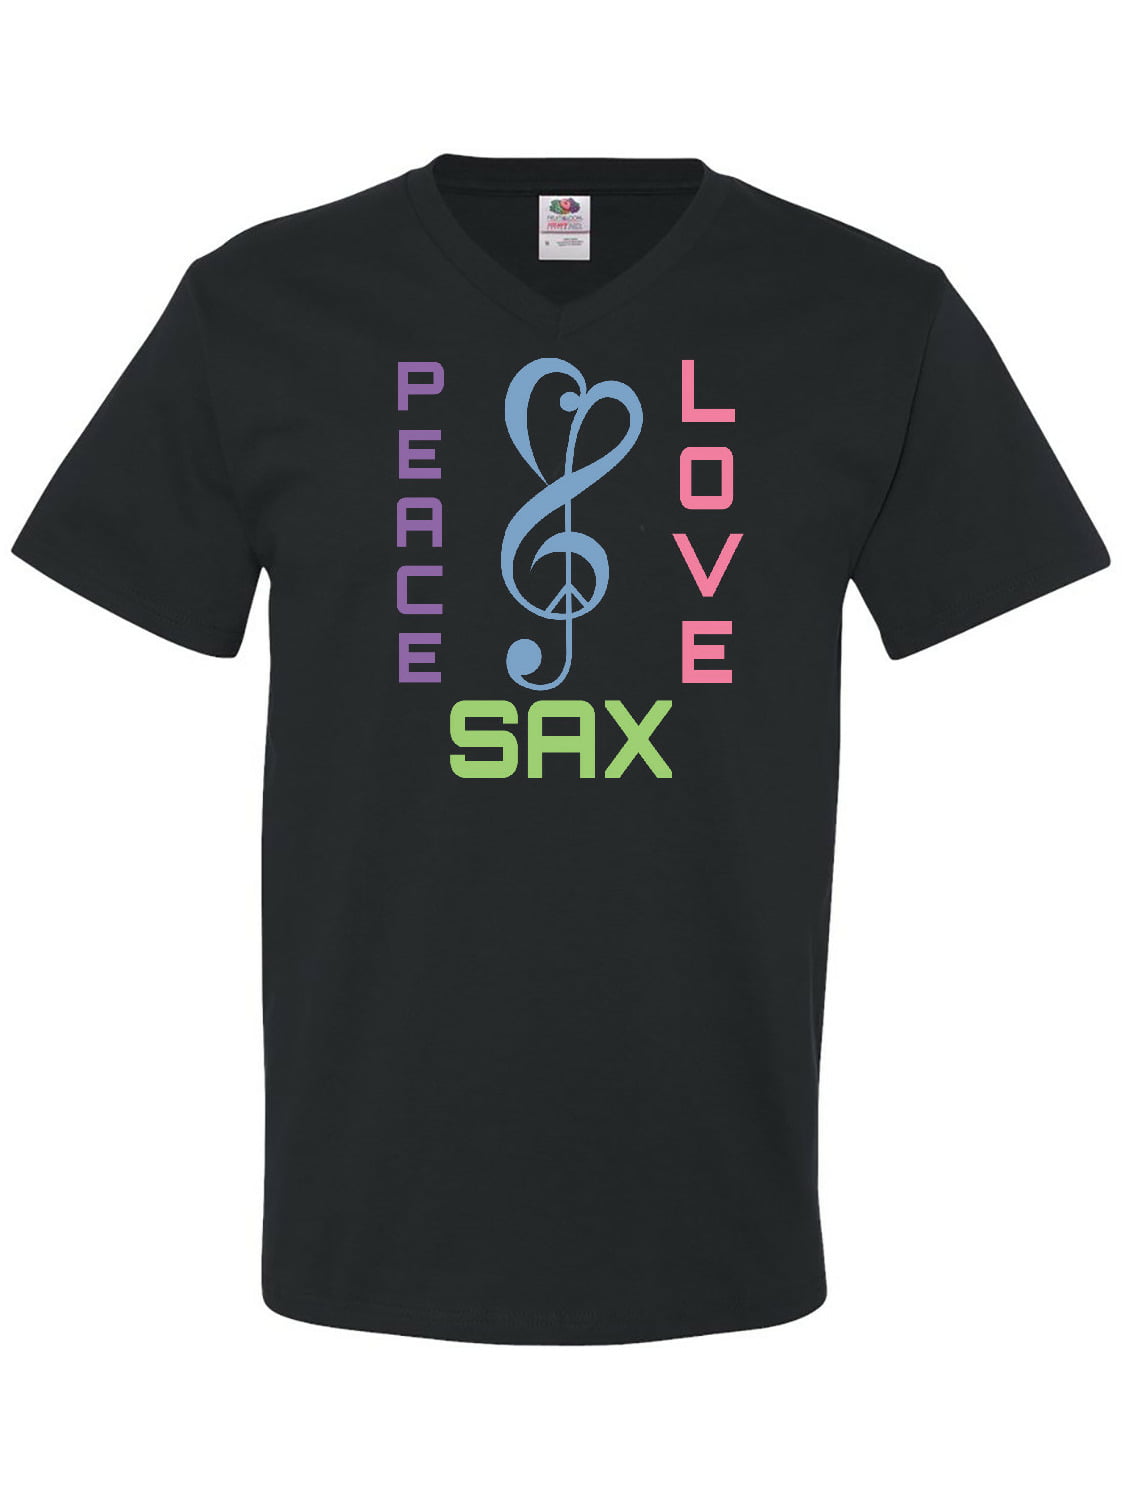 Saxophone Adults Mens Black Ringer Gift T Shirt 